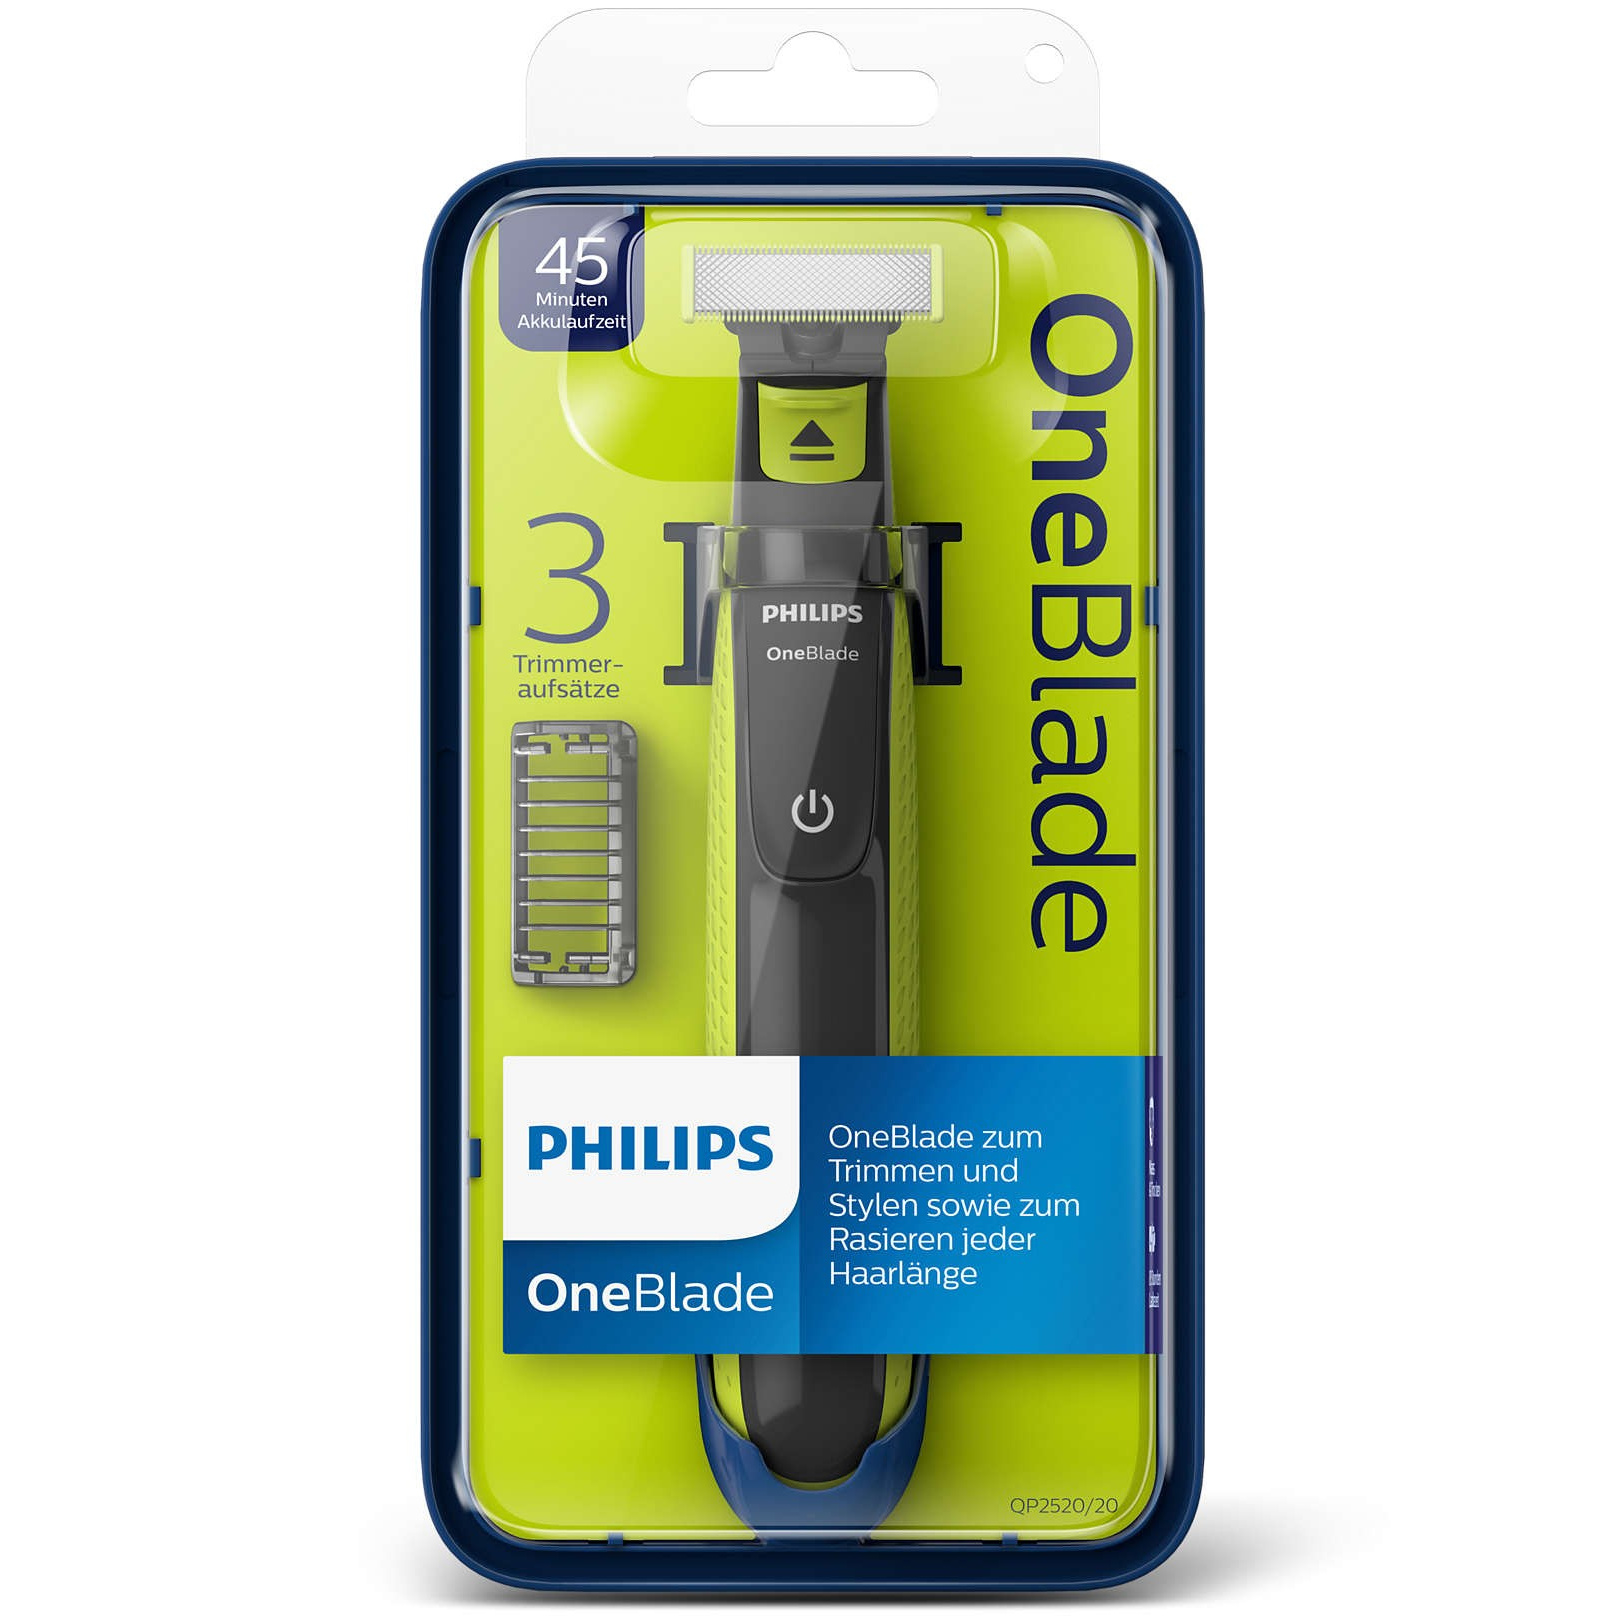  Philips OneBlade QP2520/20 - отзывы покупателей на маркетплейсе .